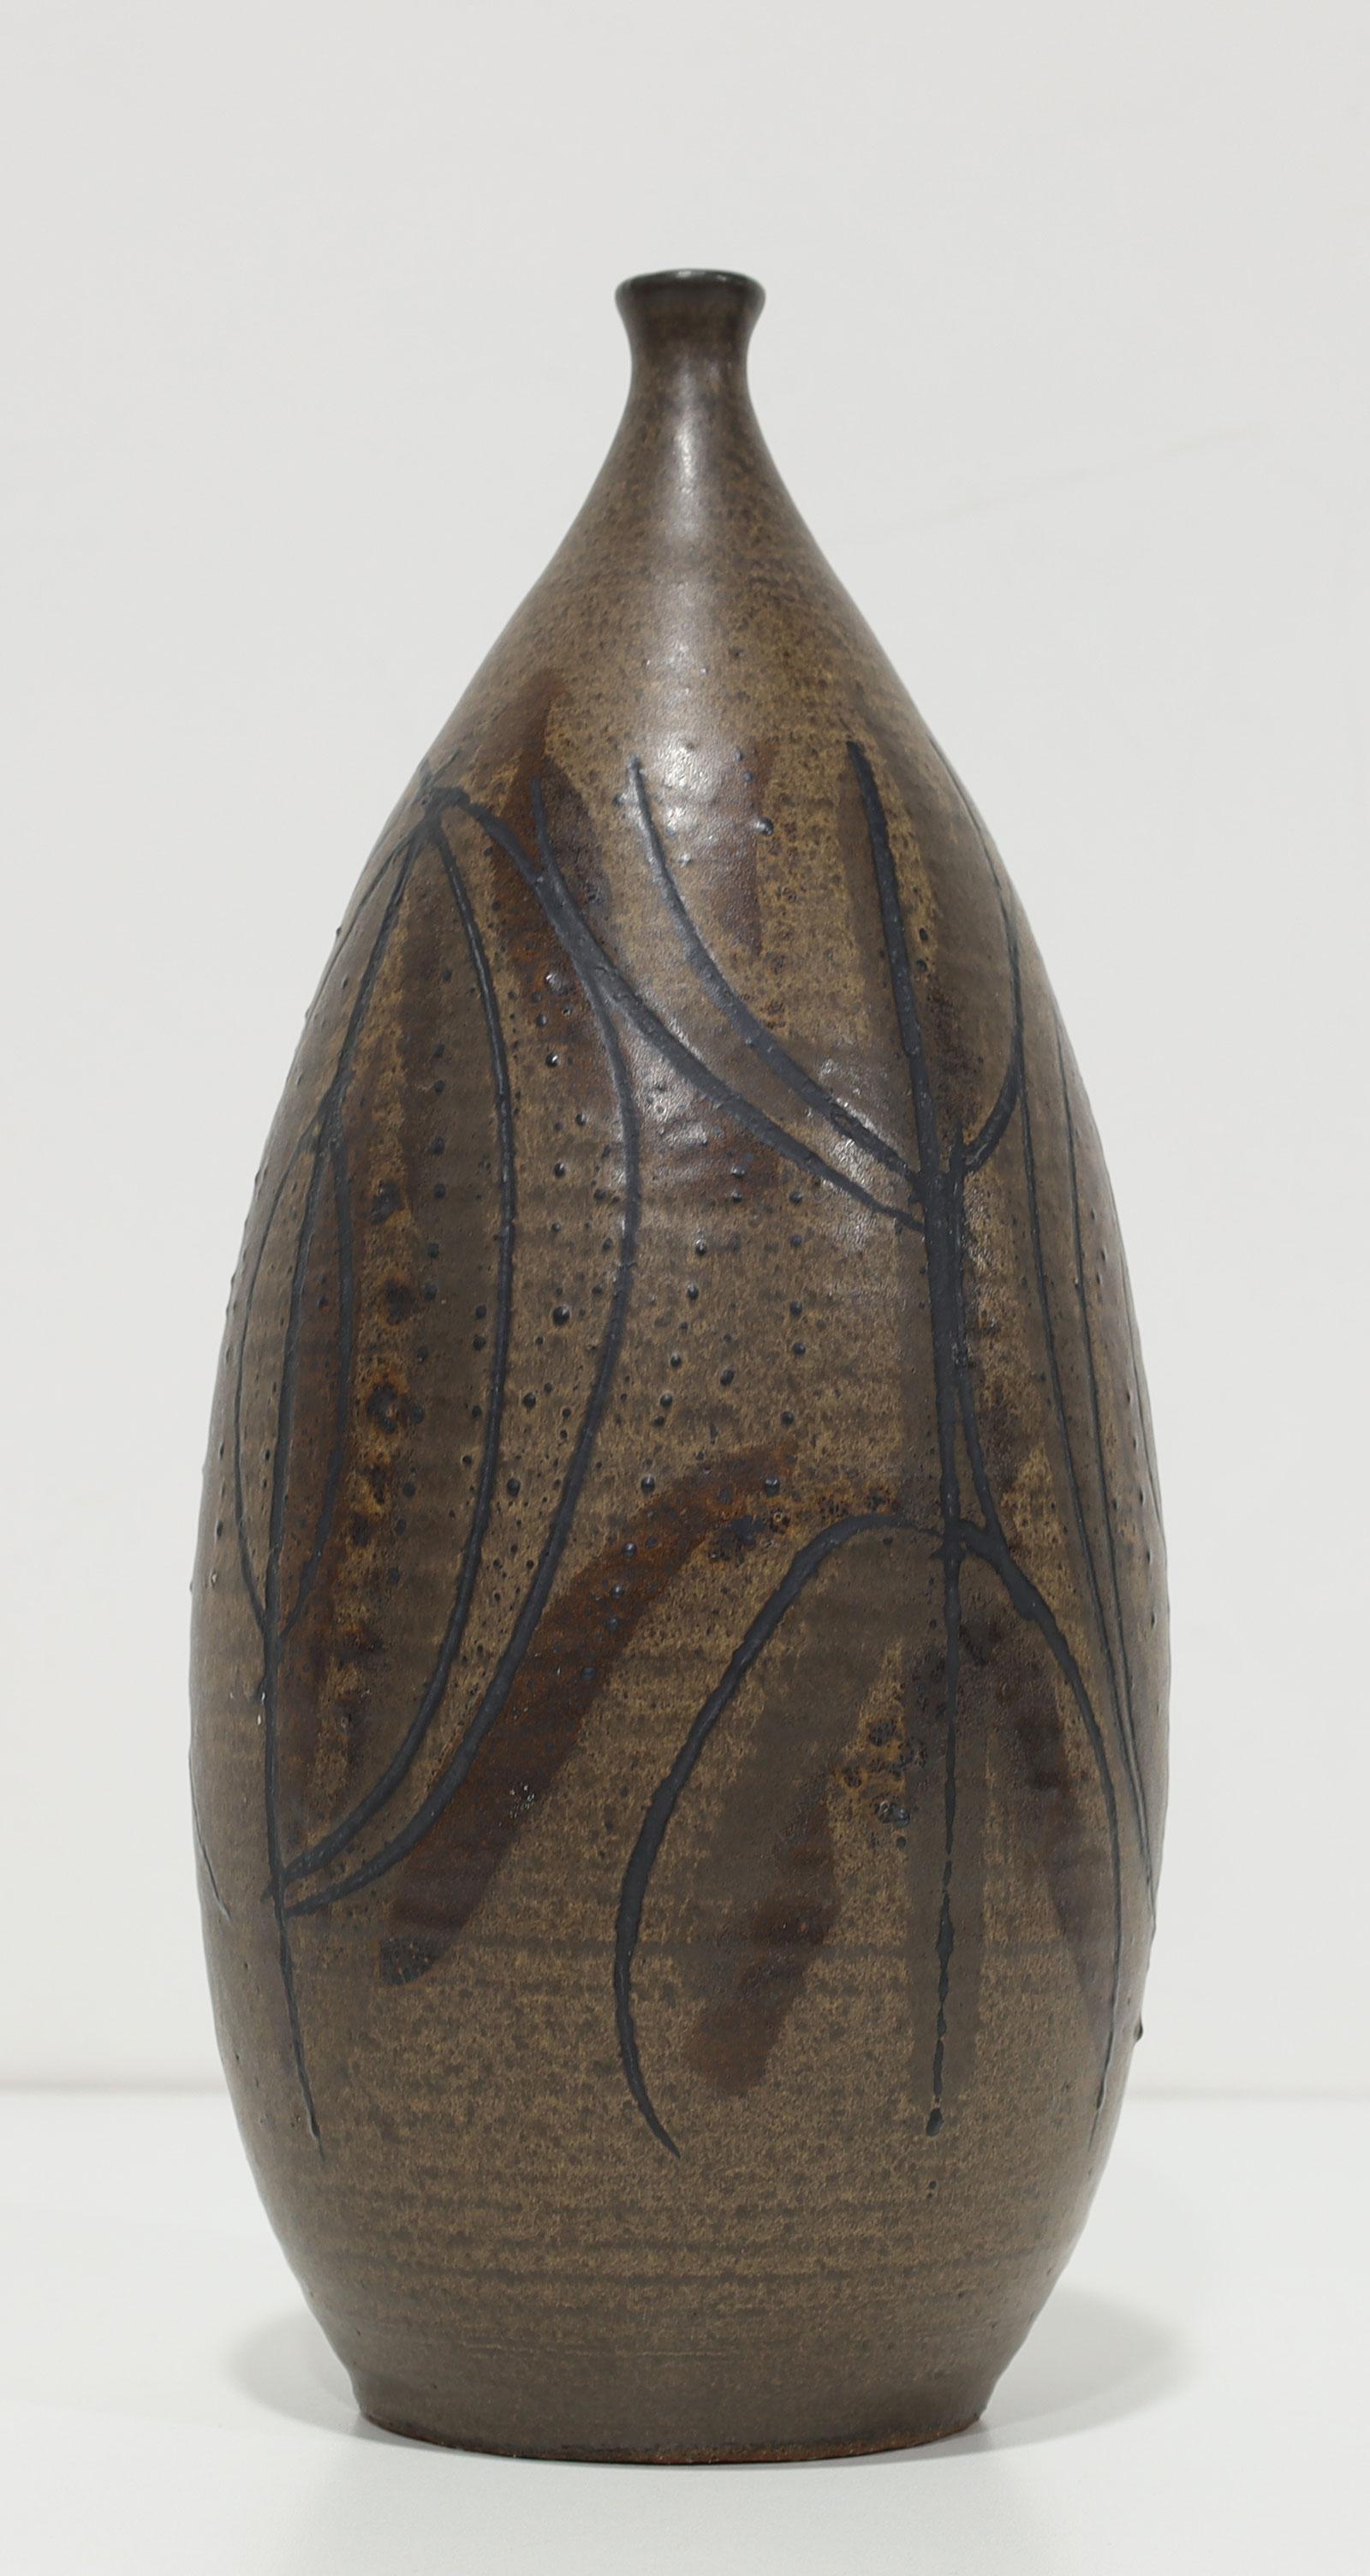 Clyde Burt Ceramic Vase In Good Condition For Sale In Dallas, TX